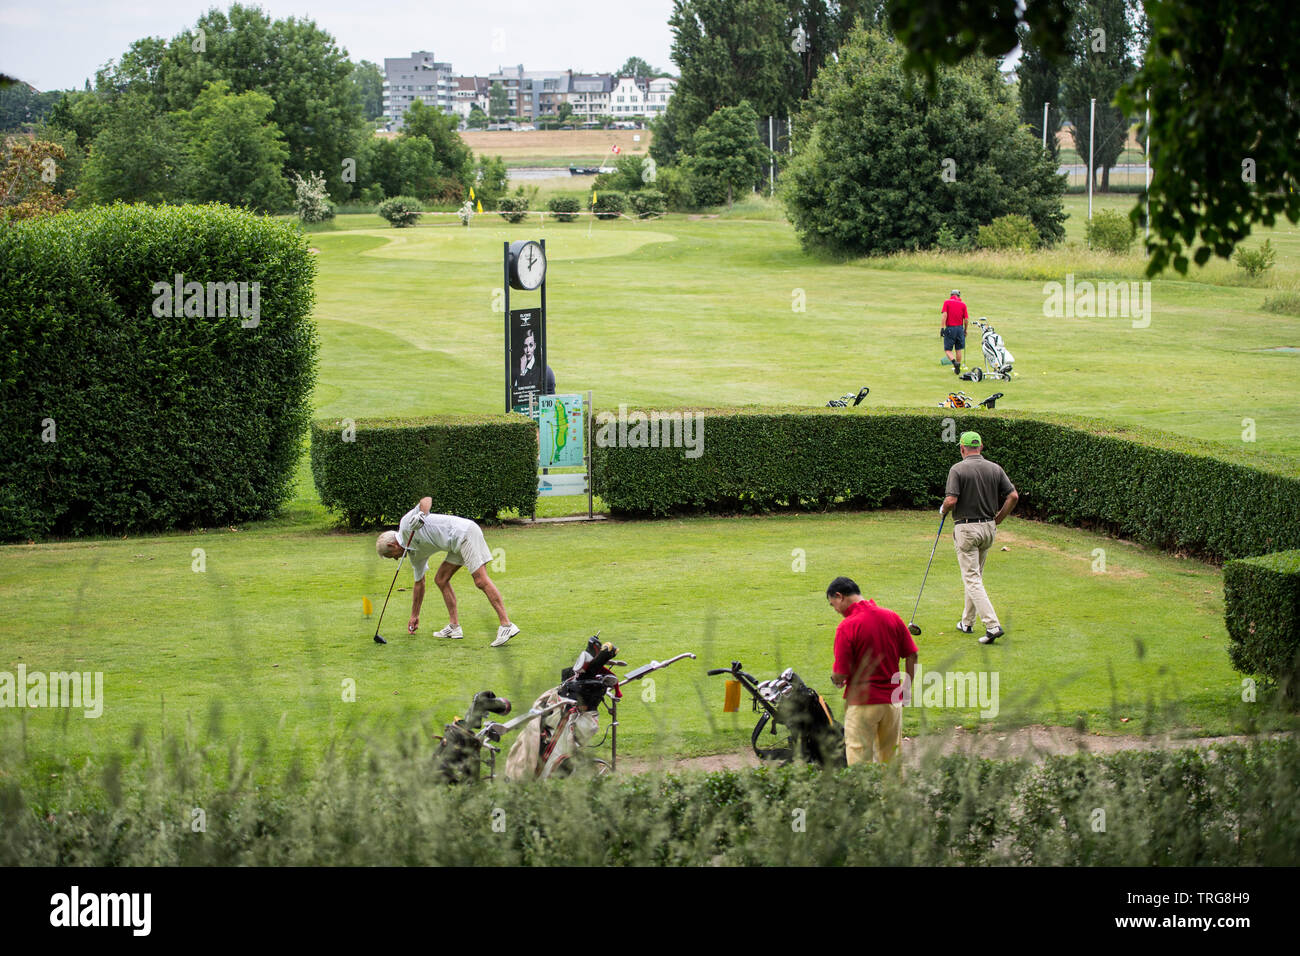 Golf Club Lausward in Düsseldorf, Germany. GSV Golf-Sport-Verein e.V. Stock Photo